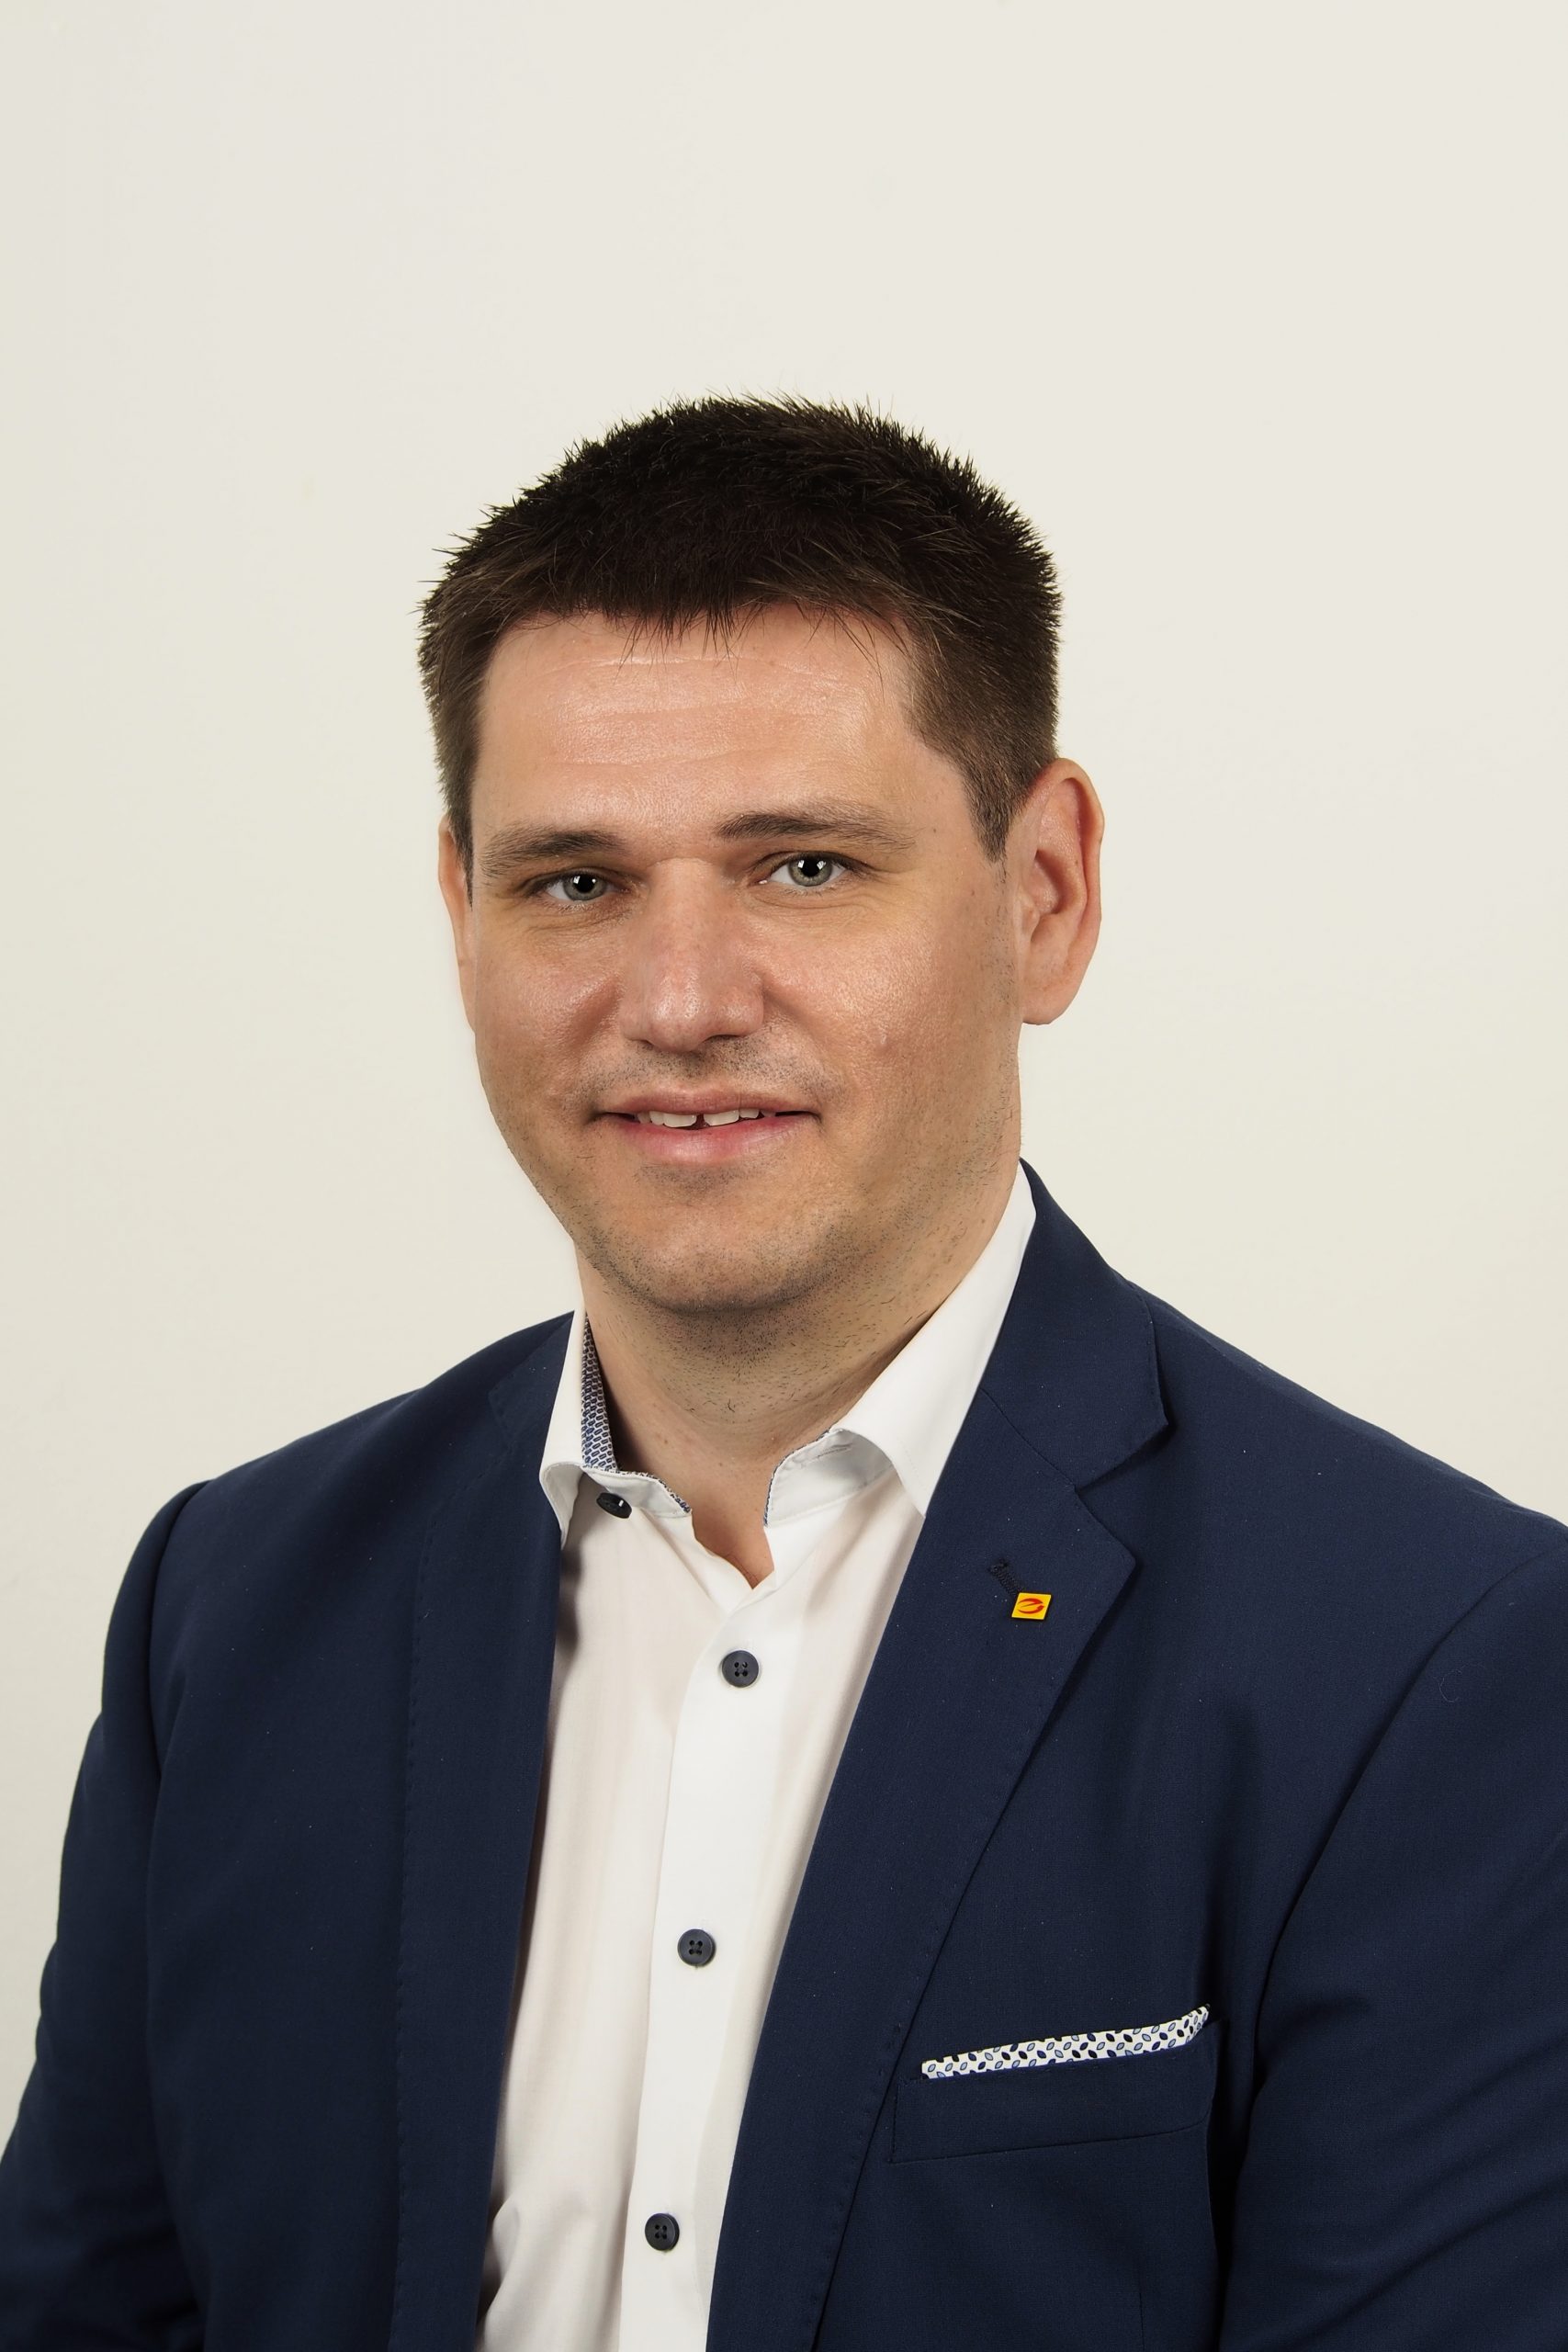 Stefan Ehinger ist neuer Vizepräsident